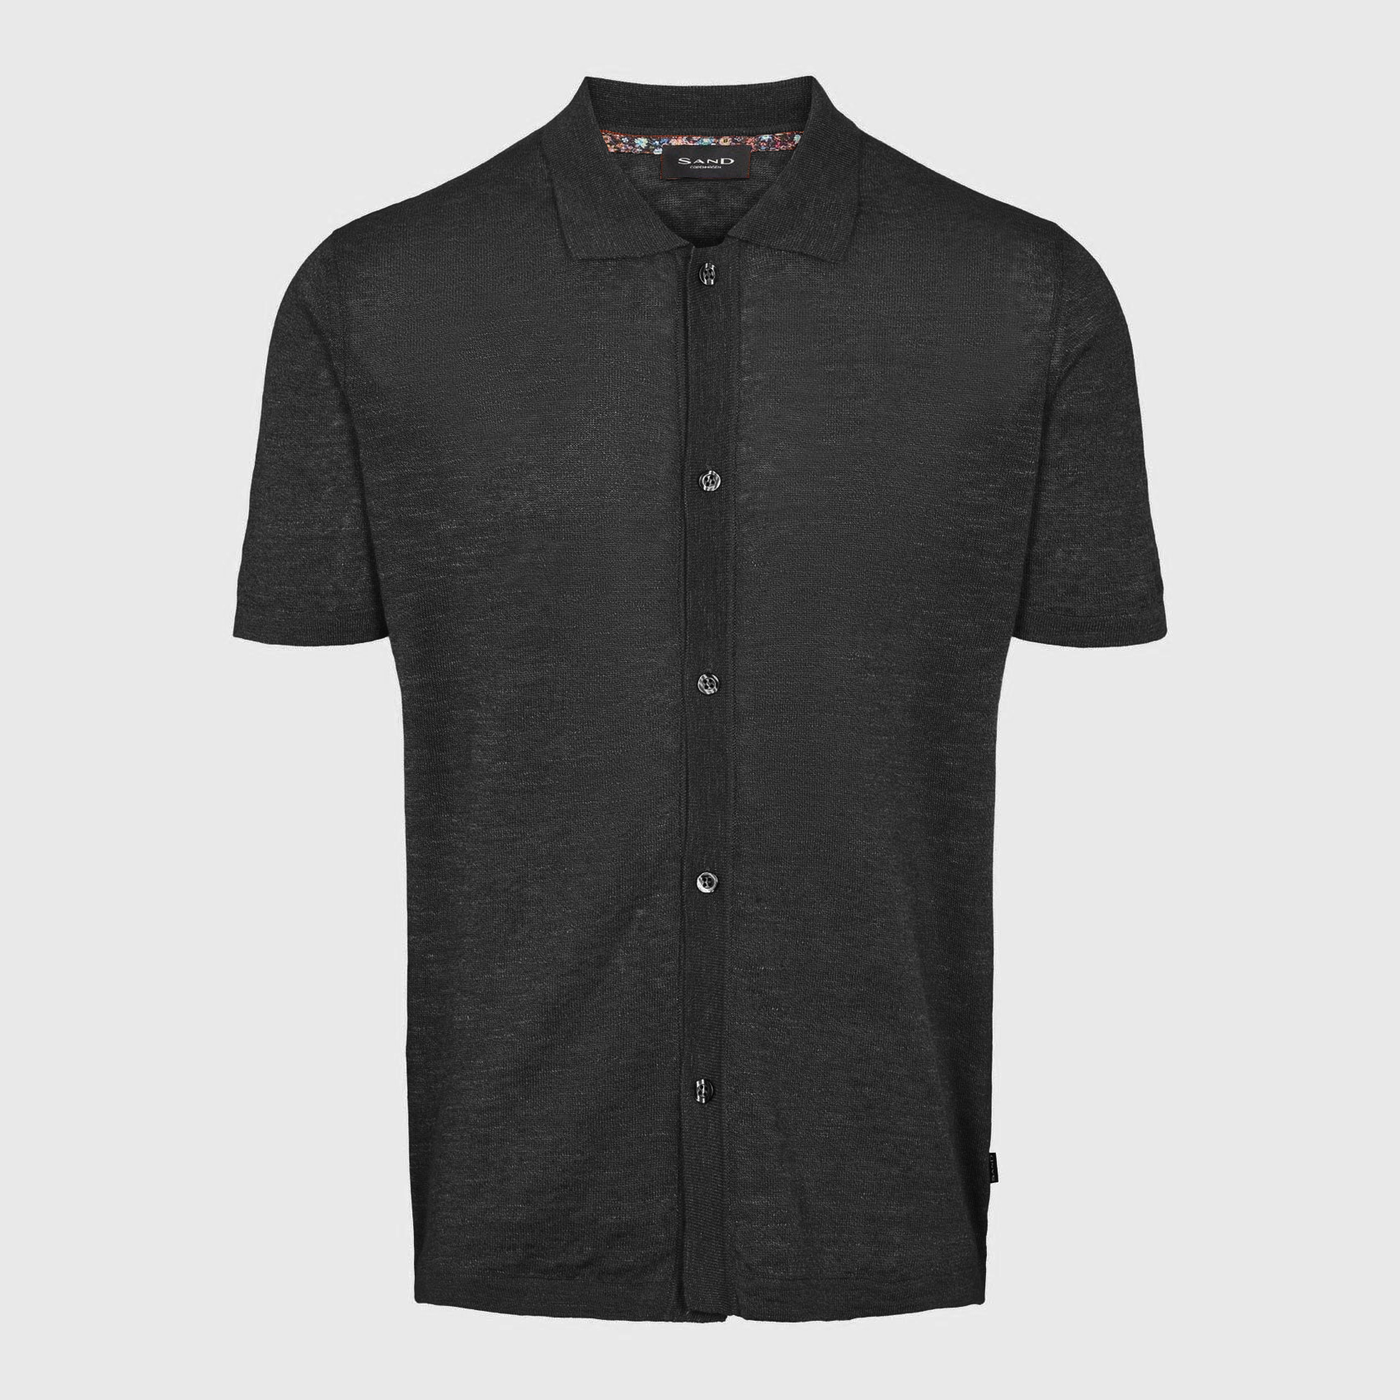 Gotstyle Fashion - Sand Collar Shirts Linen Knit Full Button Shirt - Black